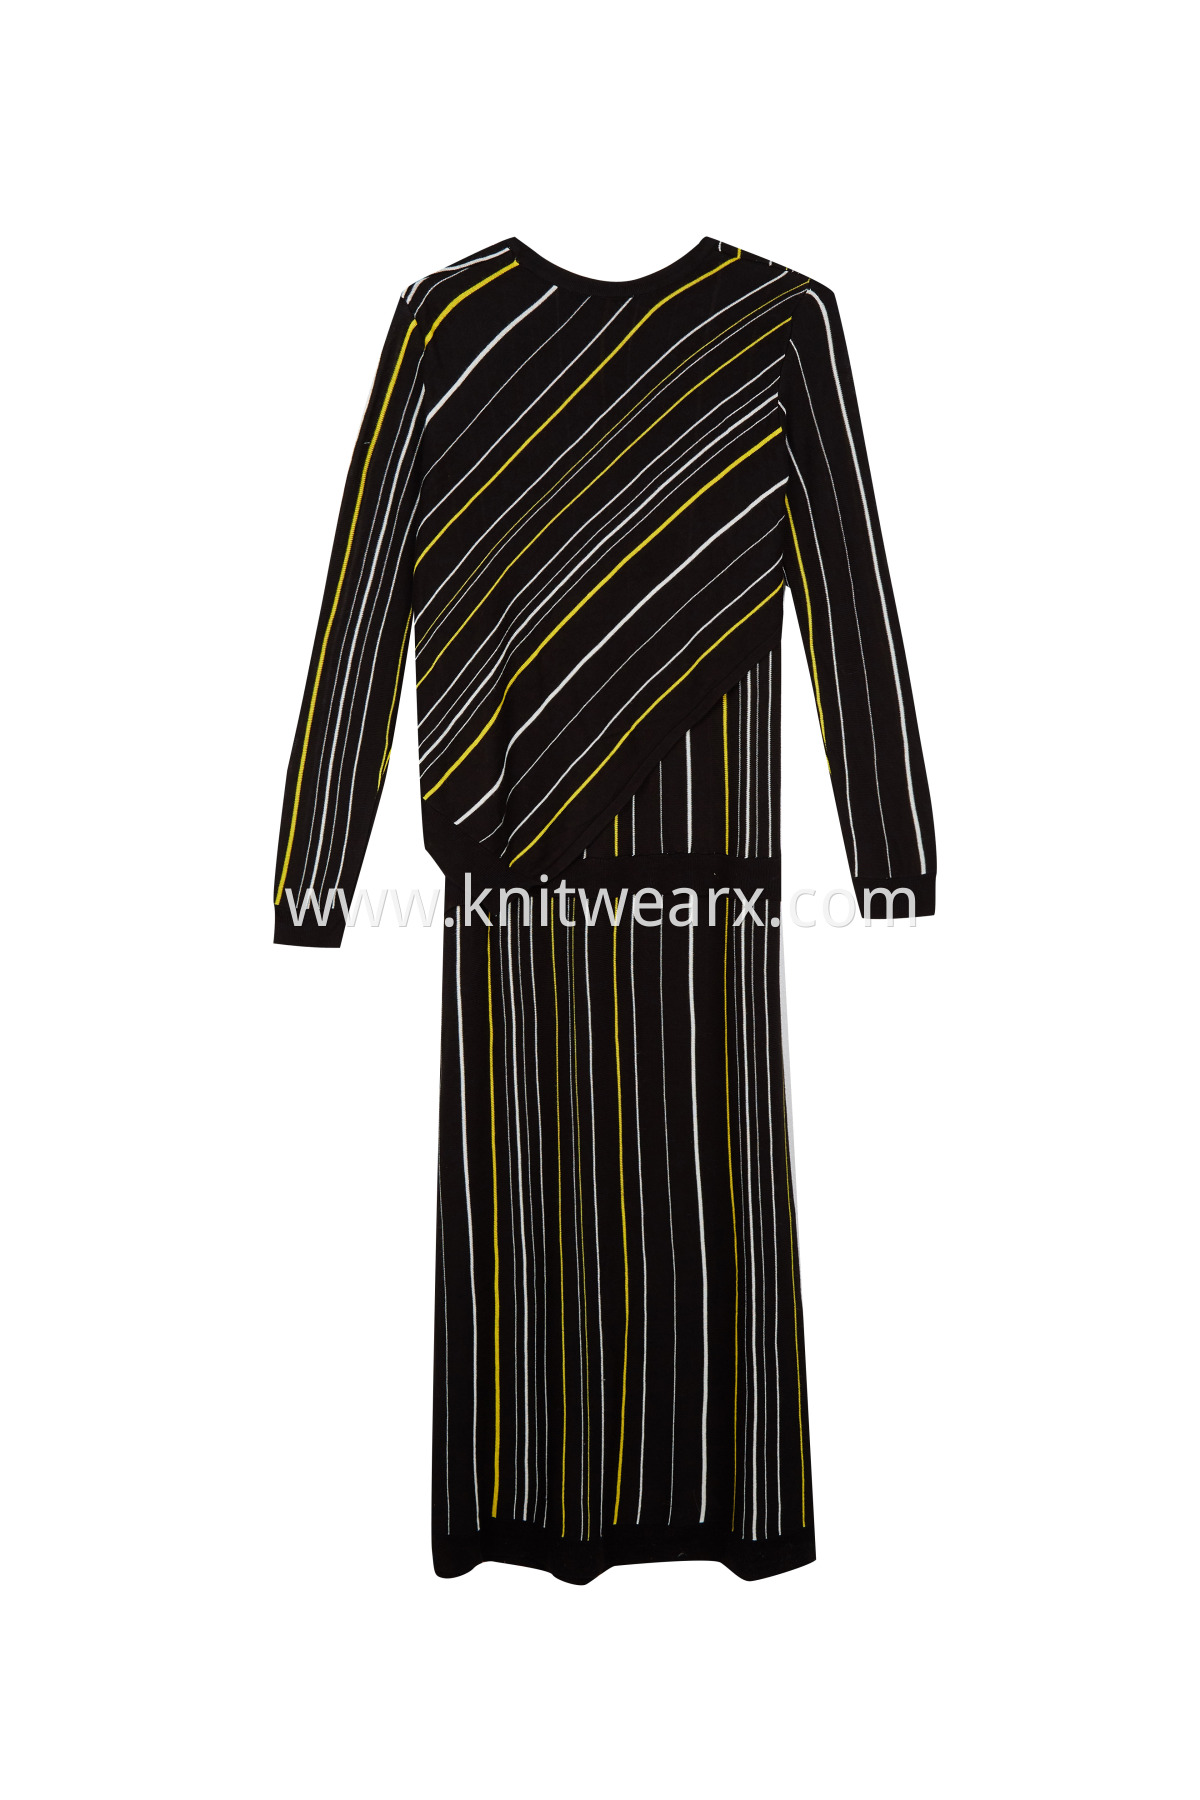 Women's Stripe Jacquard Acrylic Cotton Knitted Long Dress